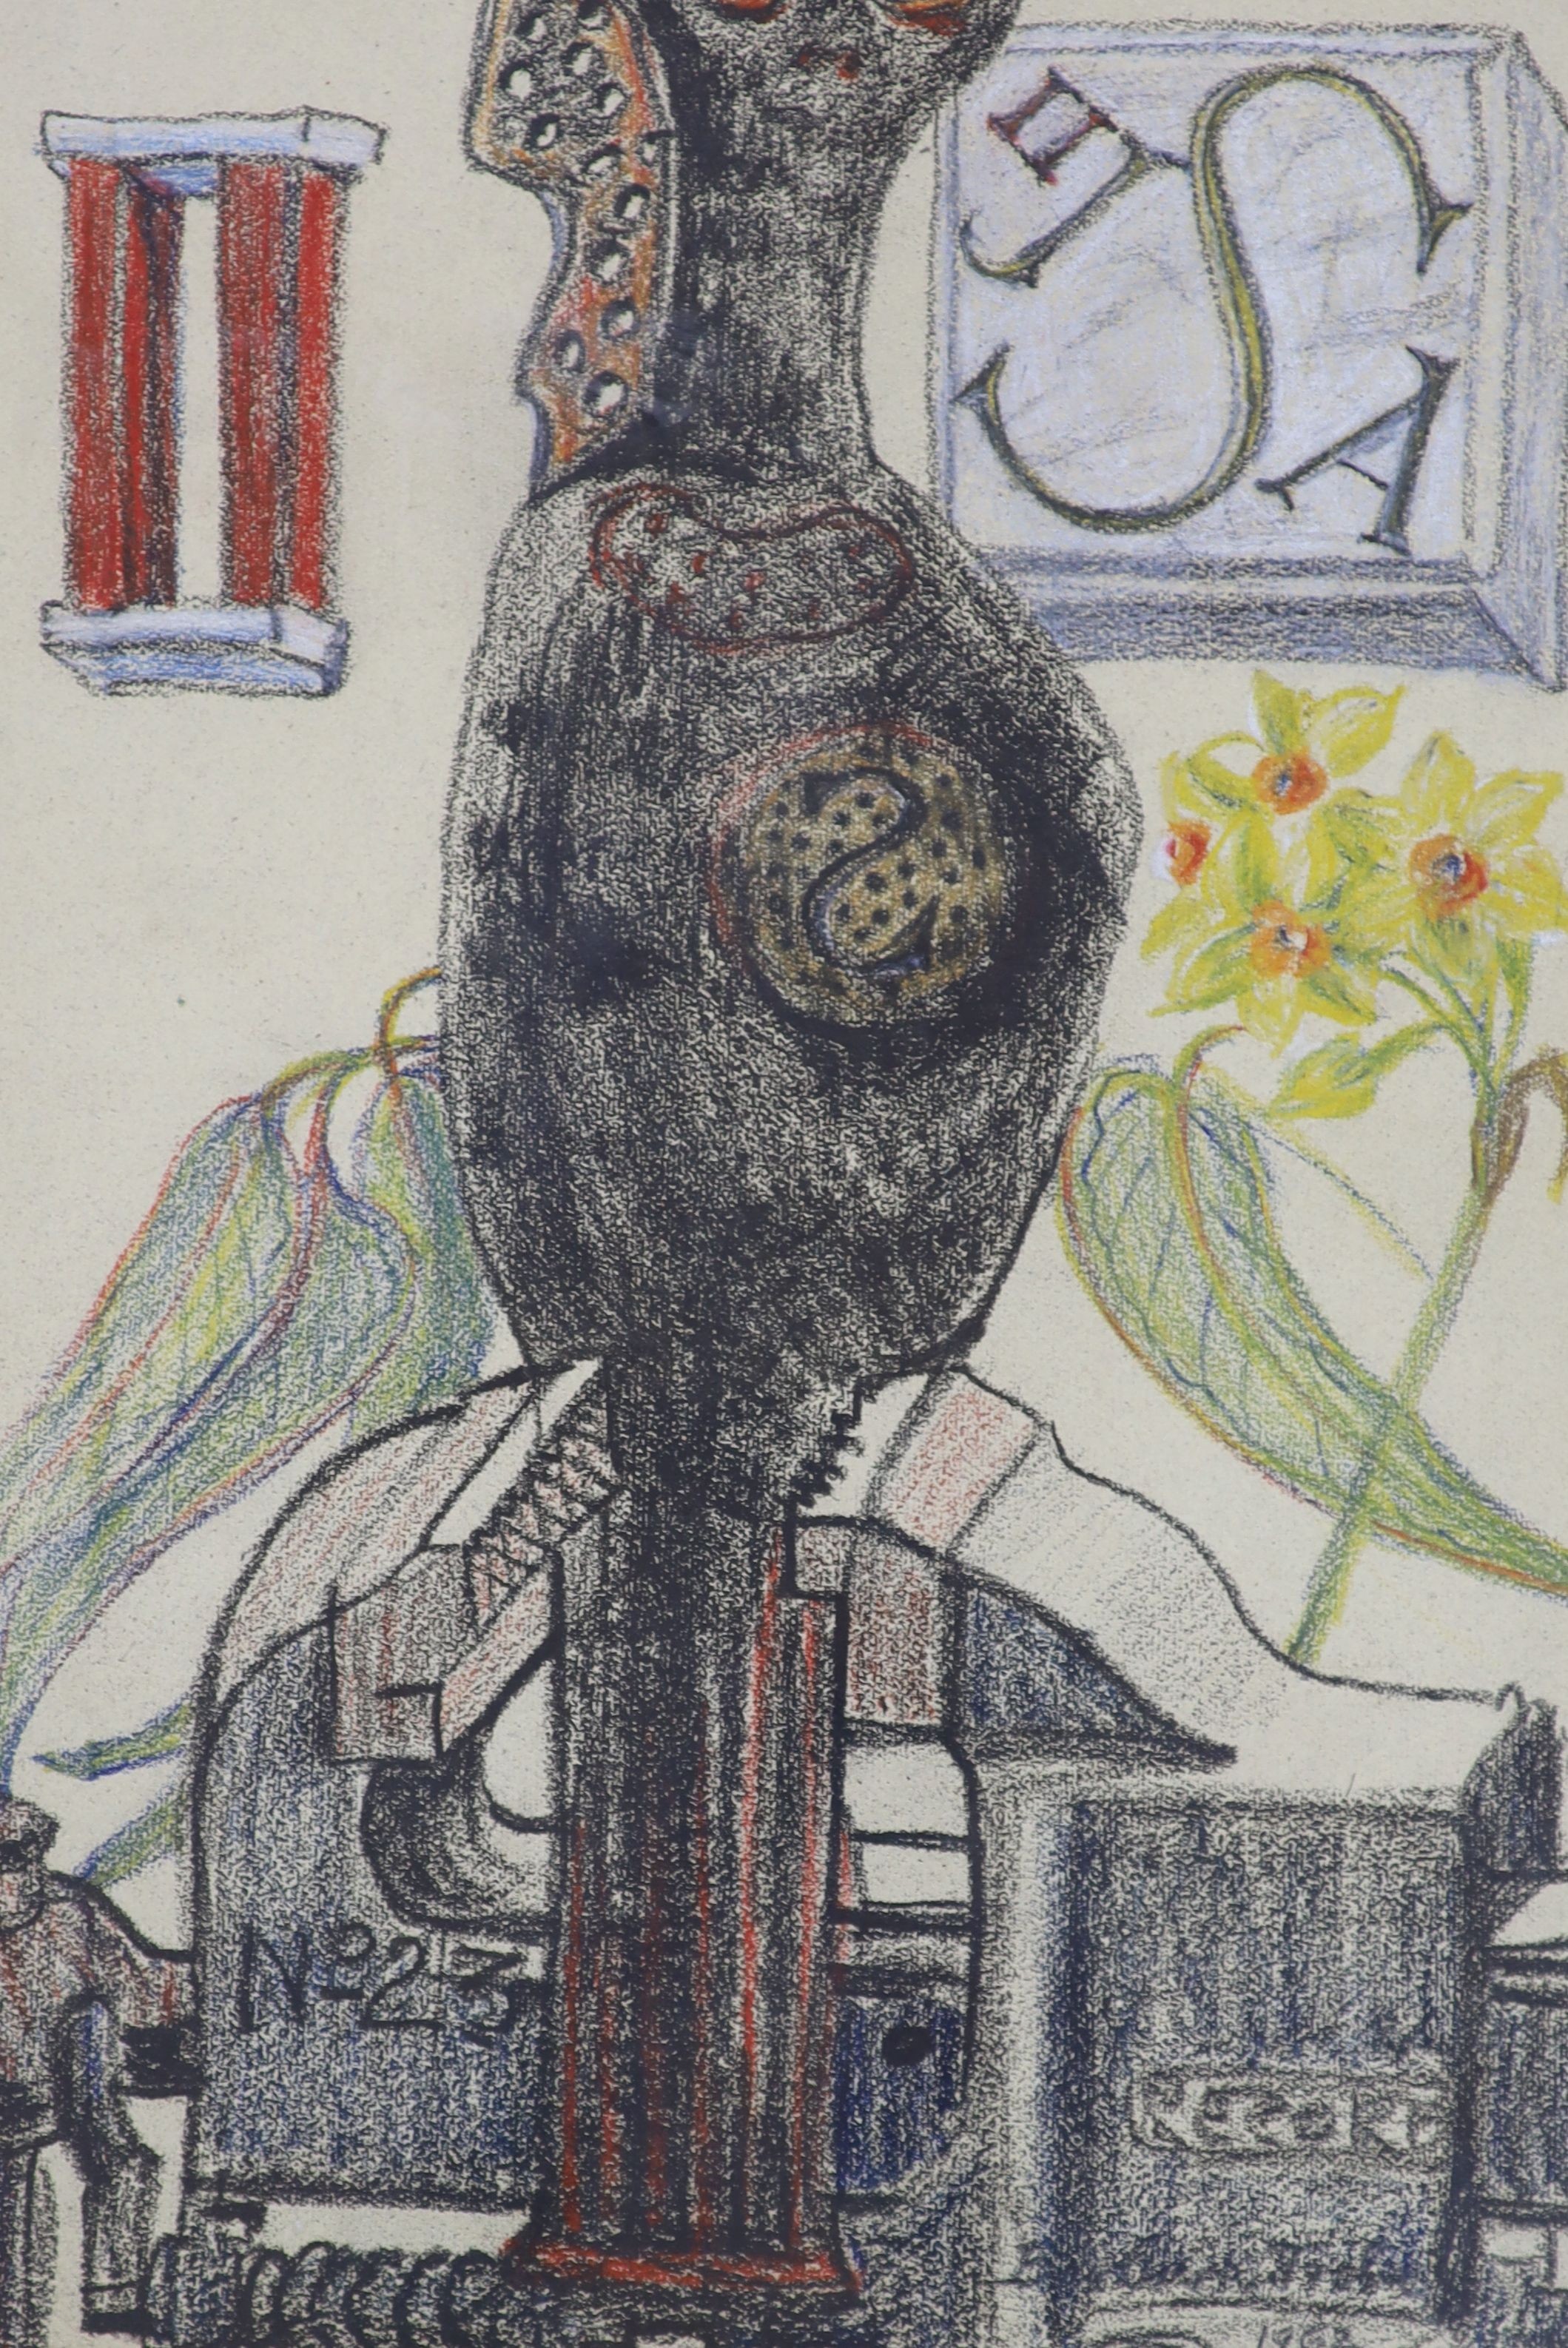 Barbara Tribe (Australian 1913-), wax crayon, Still life of a vice and daffodils, 56 x 37cm